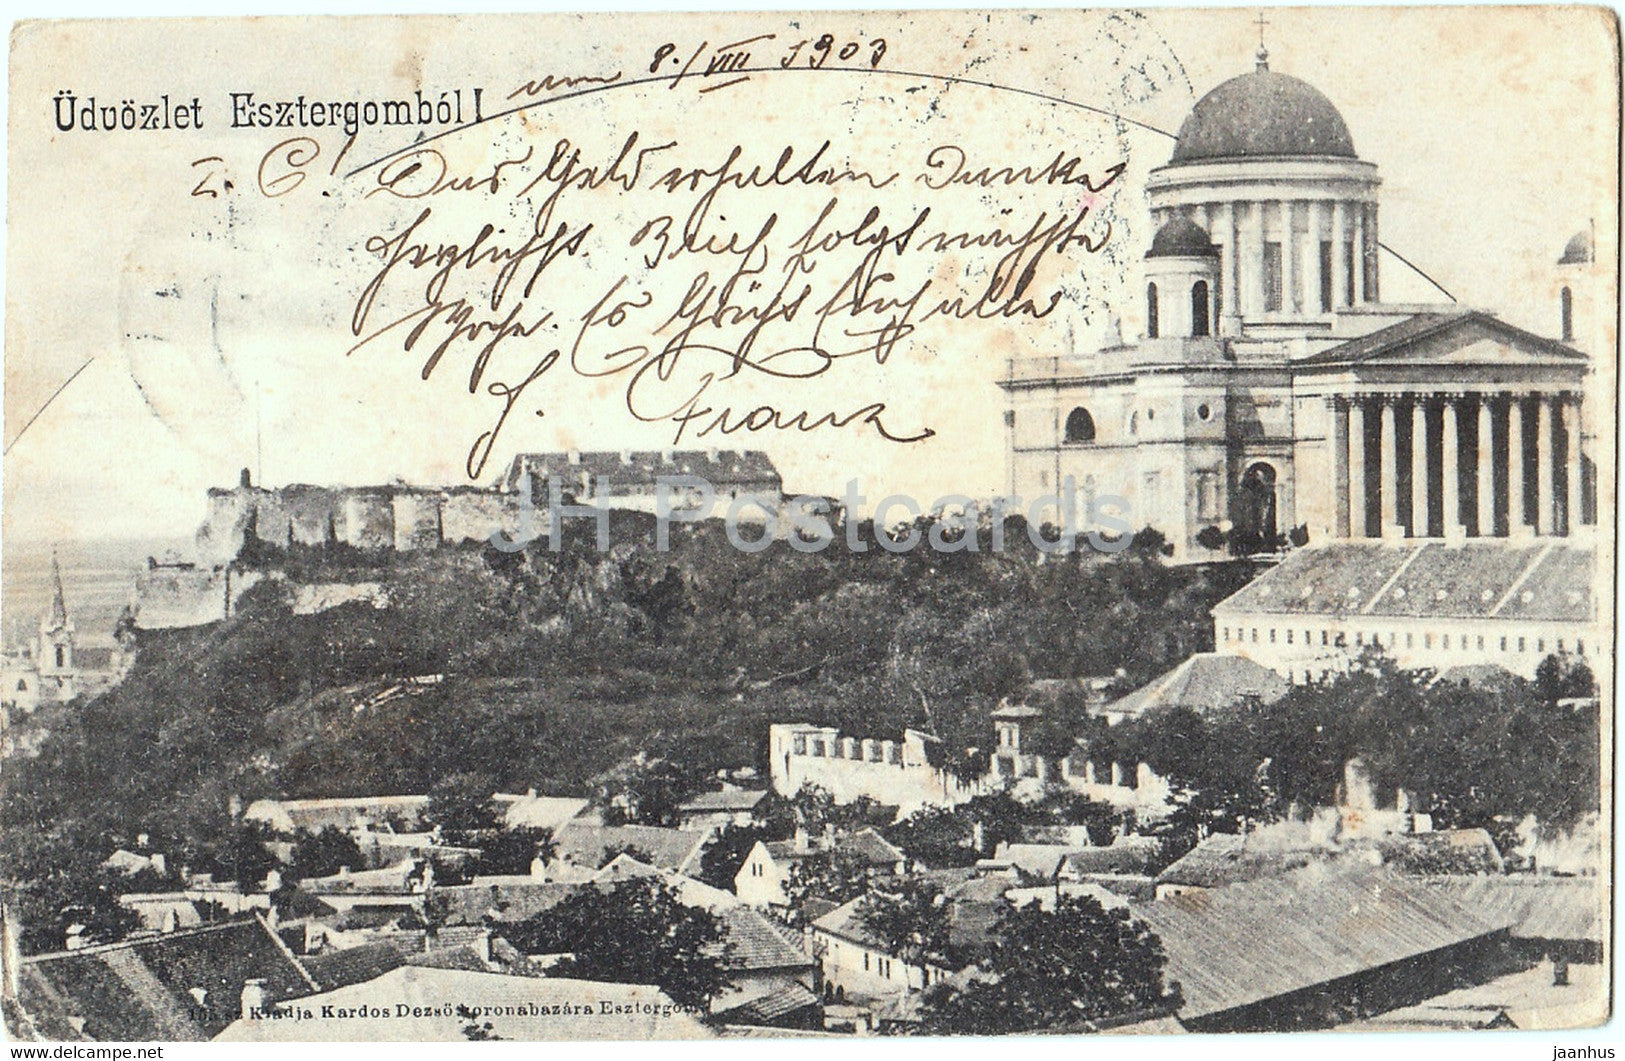 Udvozlet Esztergombol - Esztergom - old postcard - 1903 - Hungary - used - JH Postcards